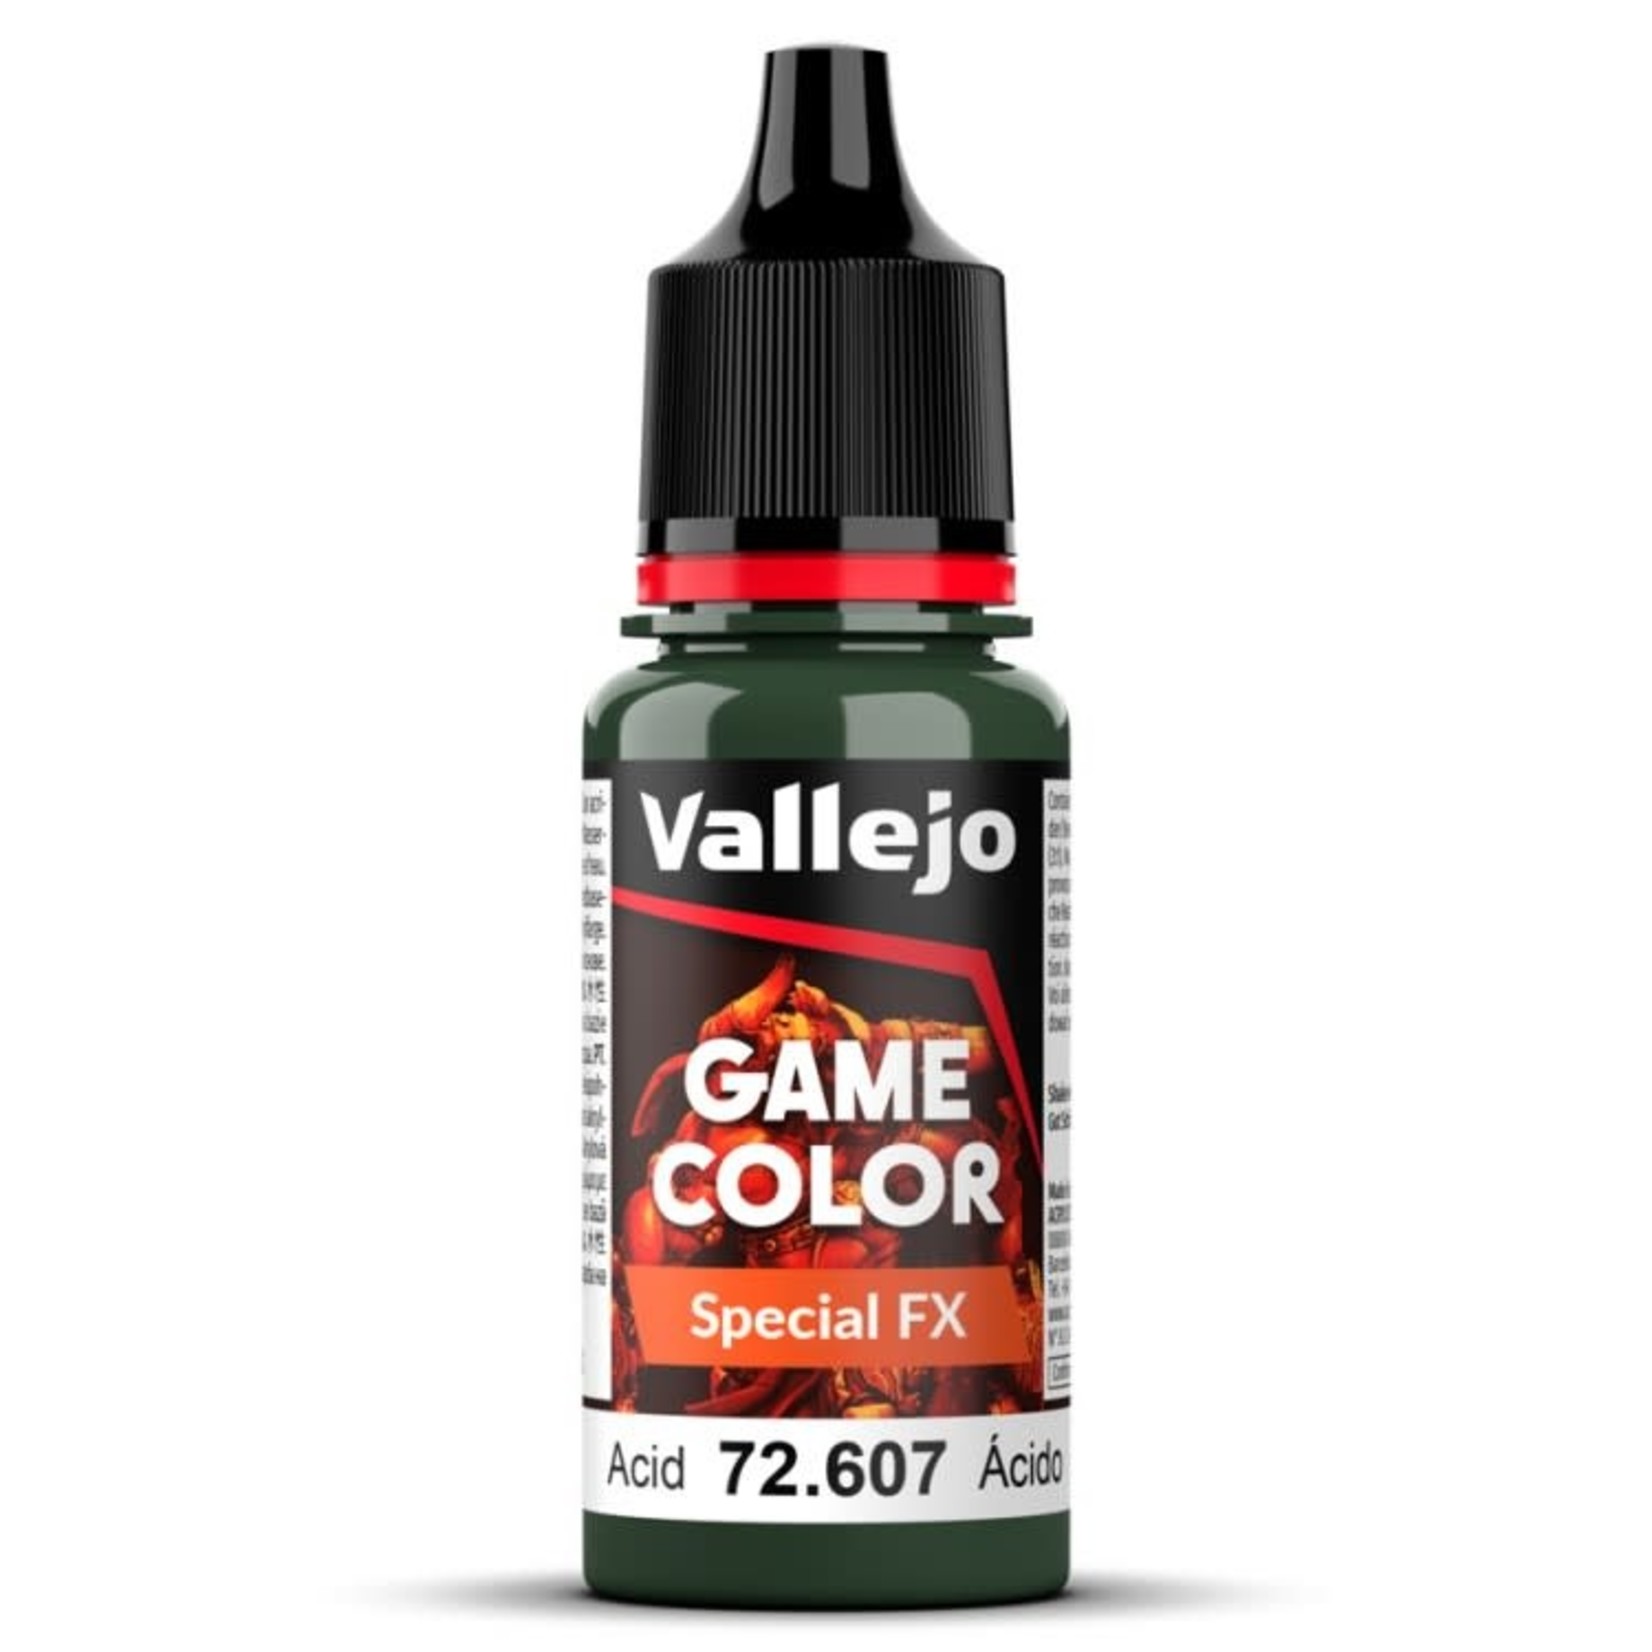 Vallejo Paint: Game Color, Special FX (Acid)